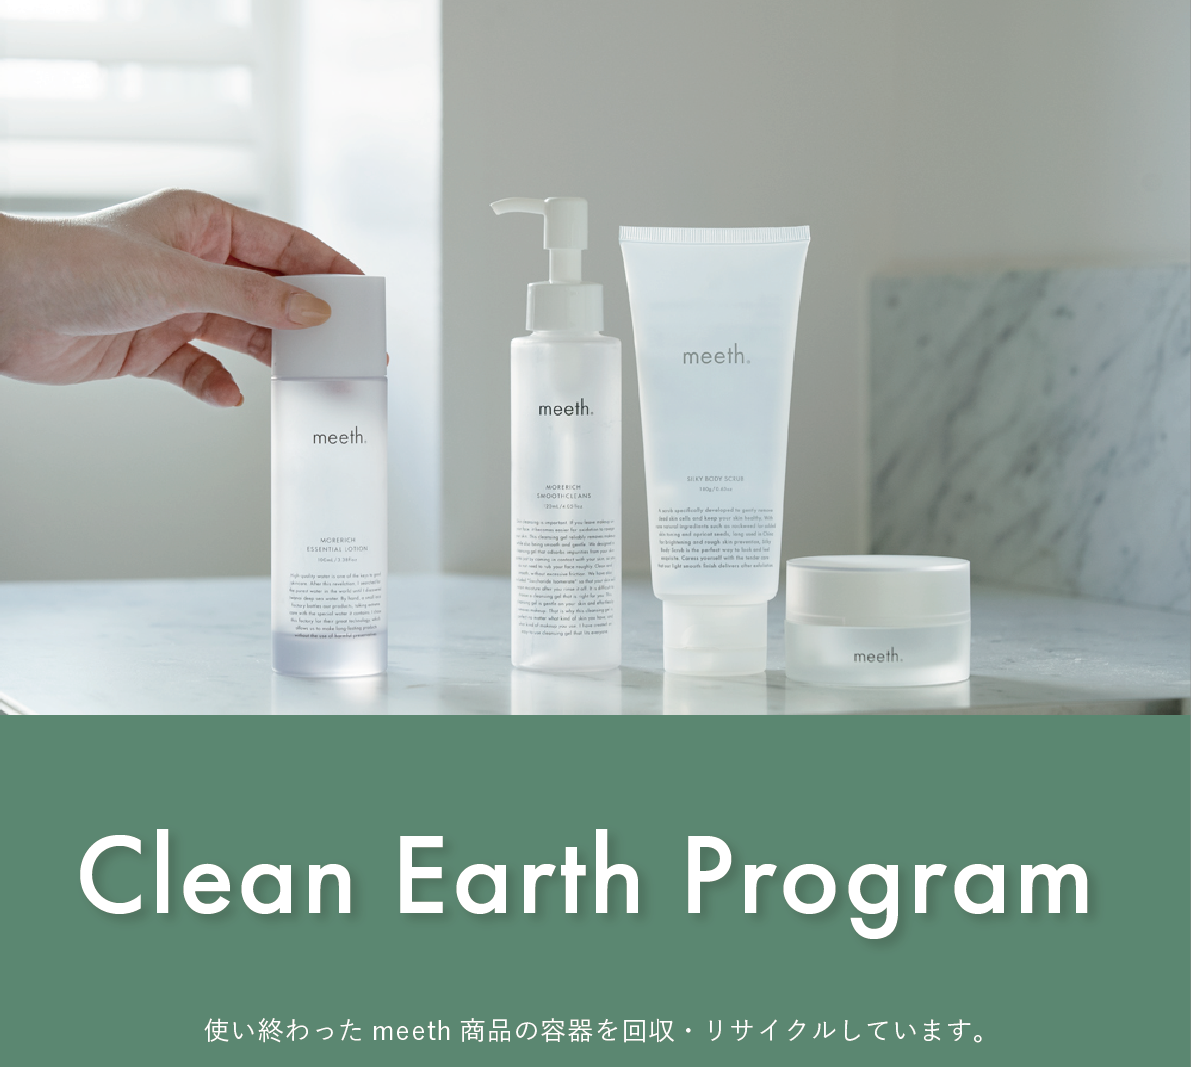 info_popup_fukuoka_cleanearthprogram.png